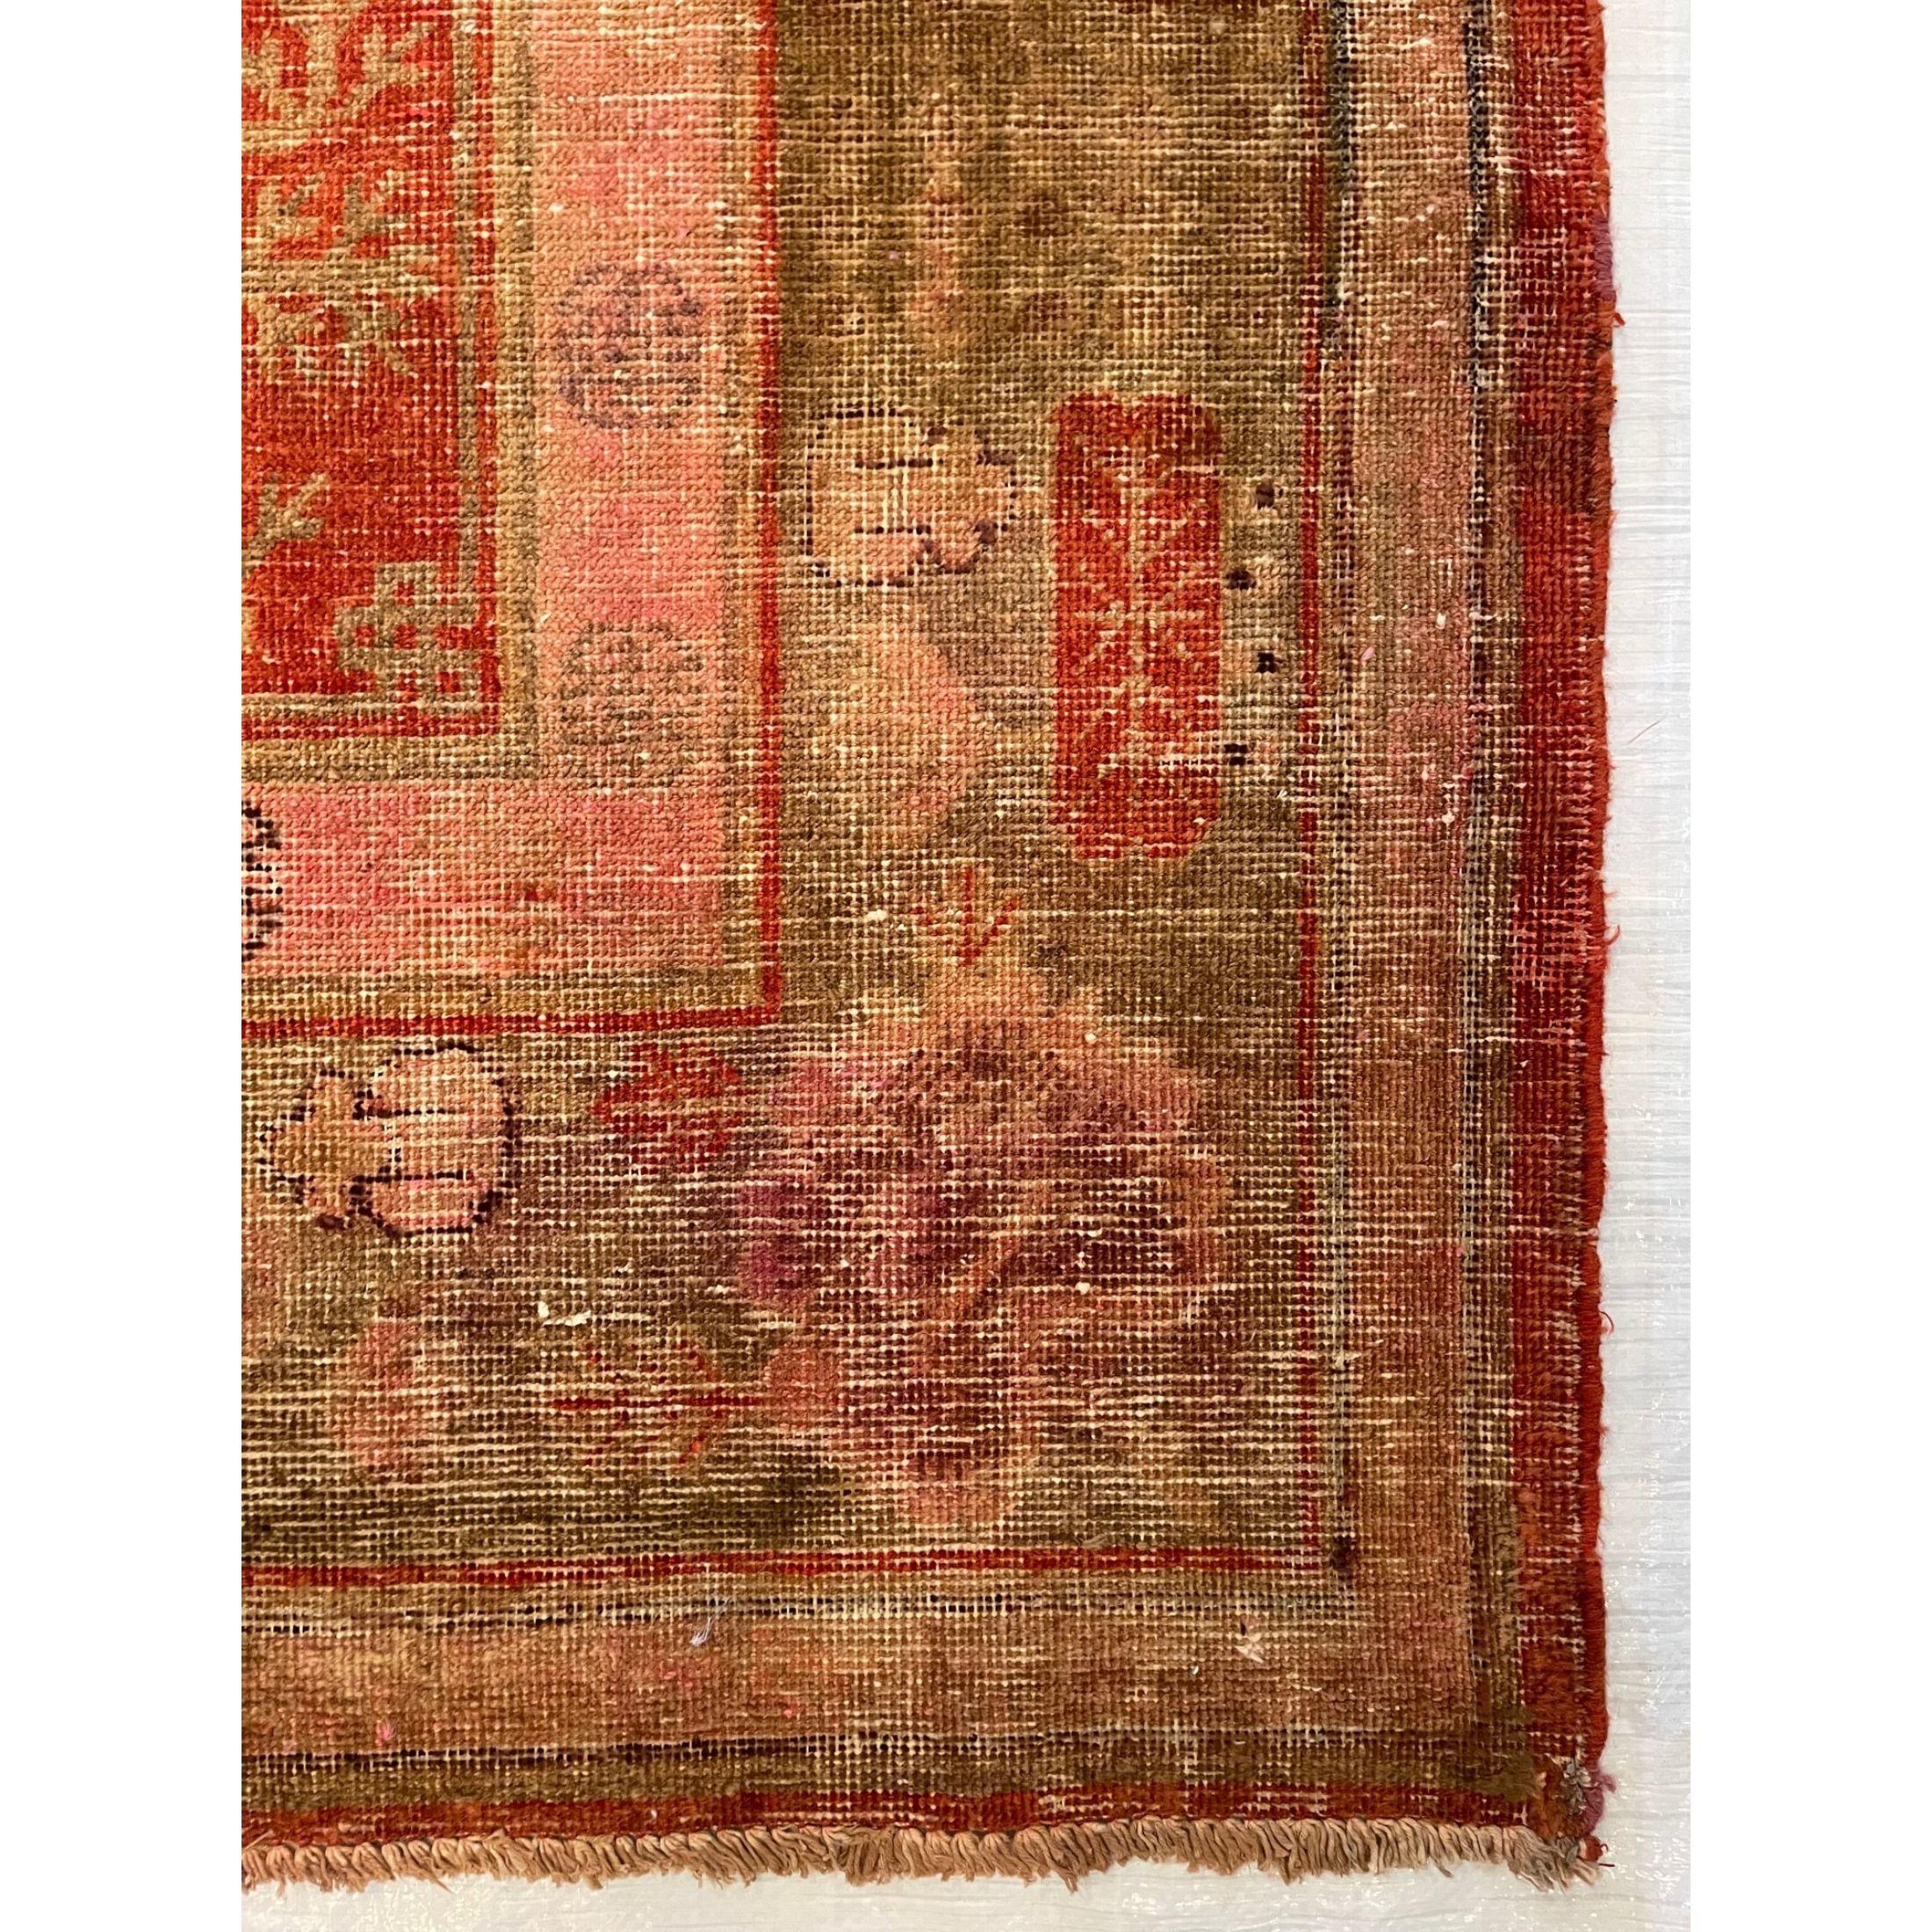 Other Vintage Central Asian Style Samarkand Rug For Sale